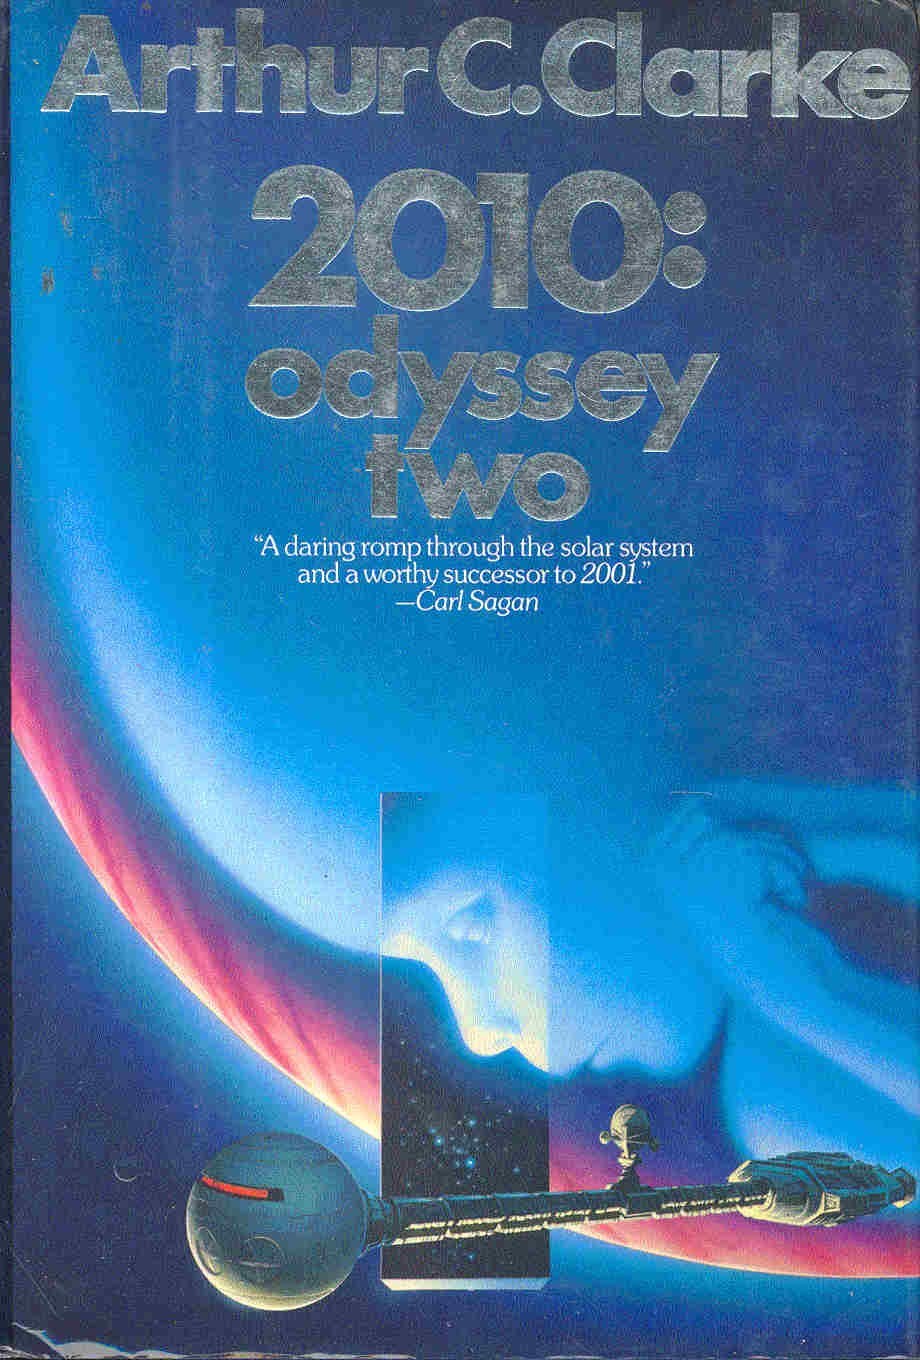 April 2013 book: 2010: Odyssey Two, Arthur C. Clarke